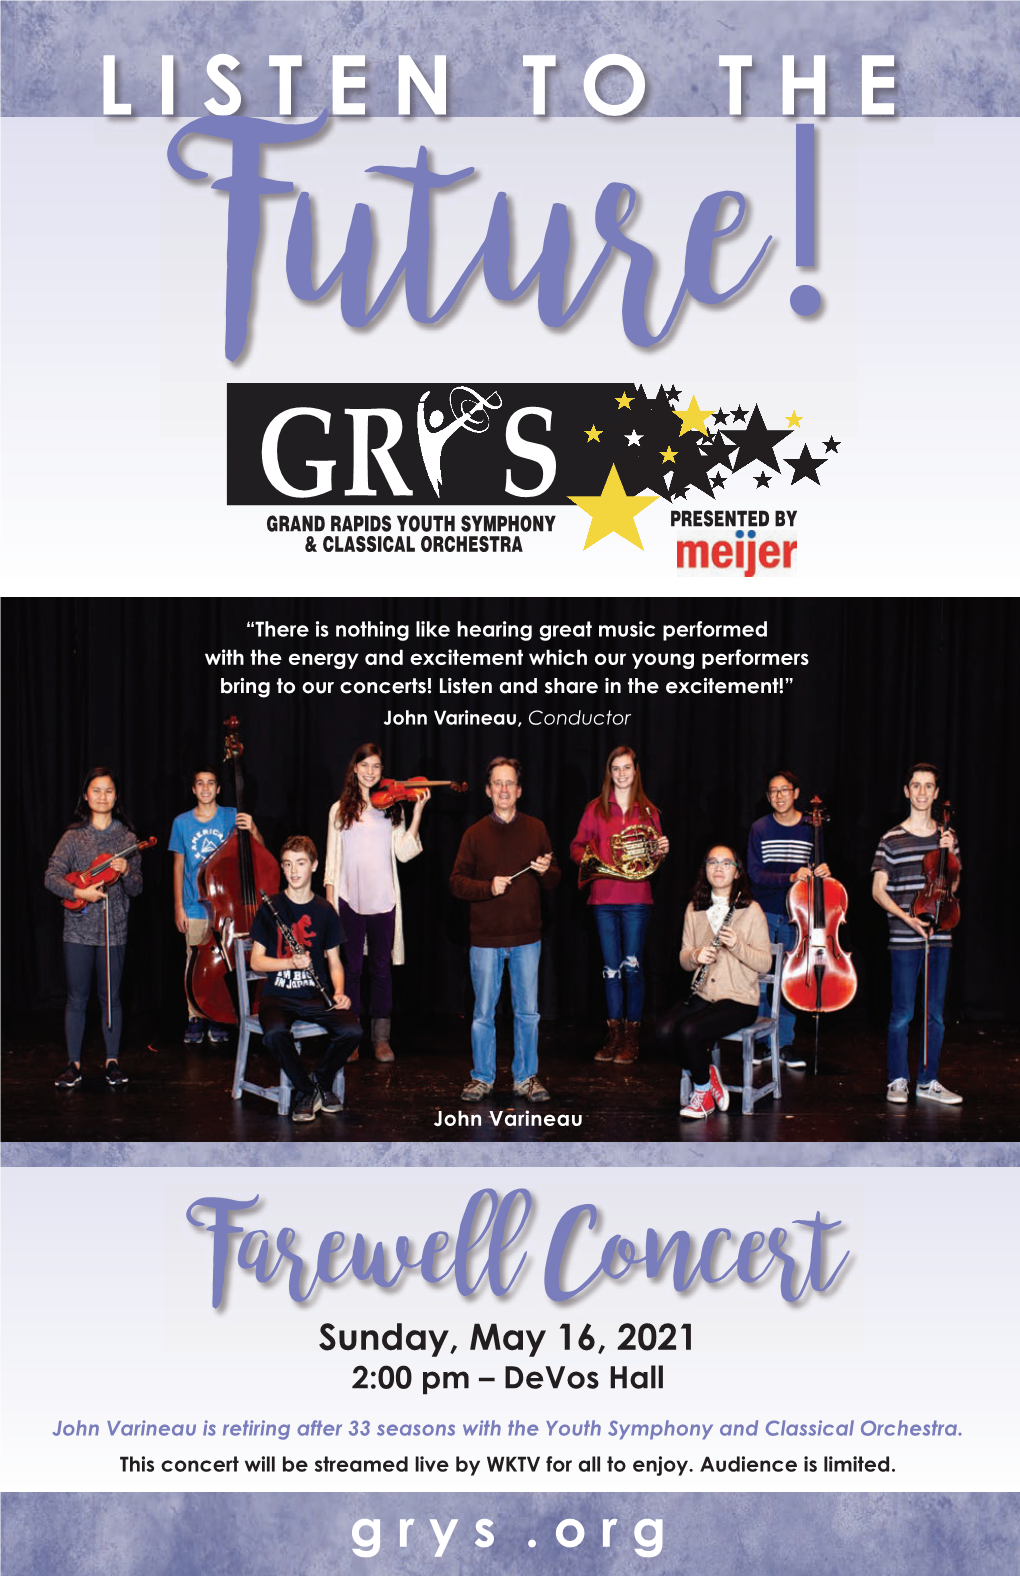 Farewell Concert Sunday, May 16, 2021 2:00 Pm – Devos Hall